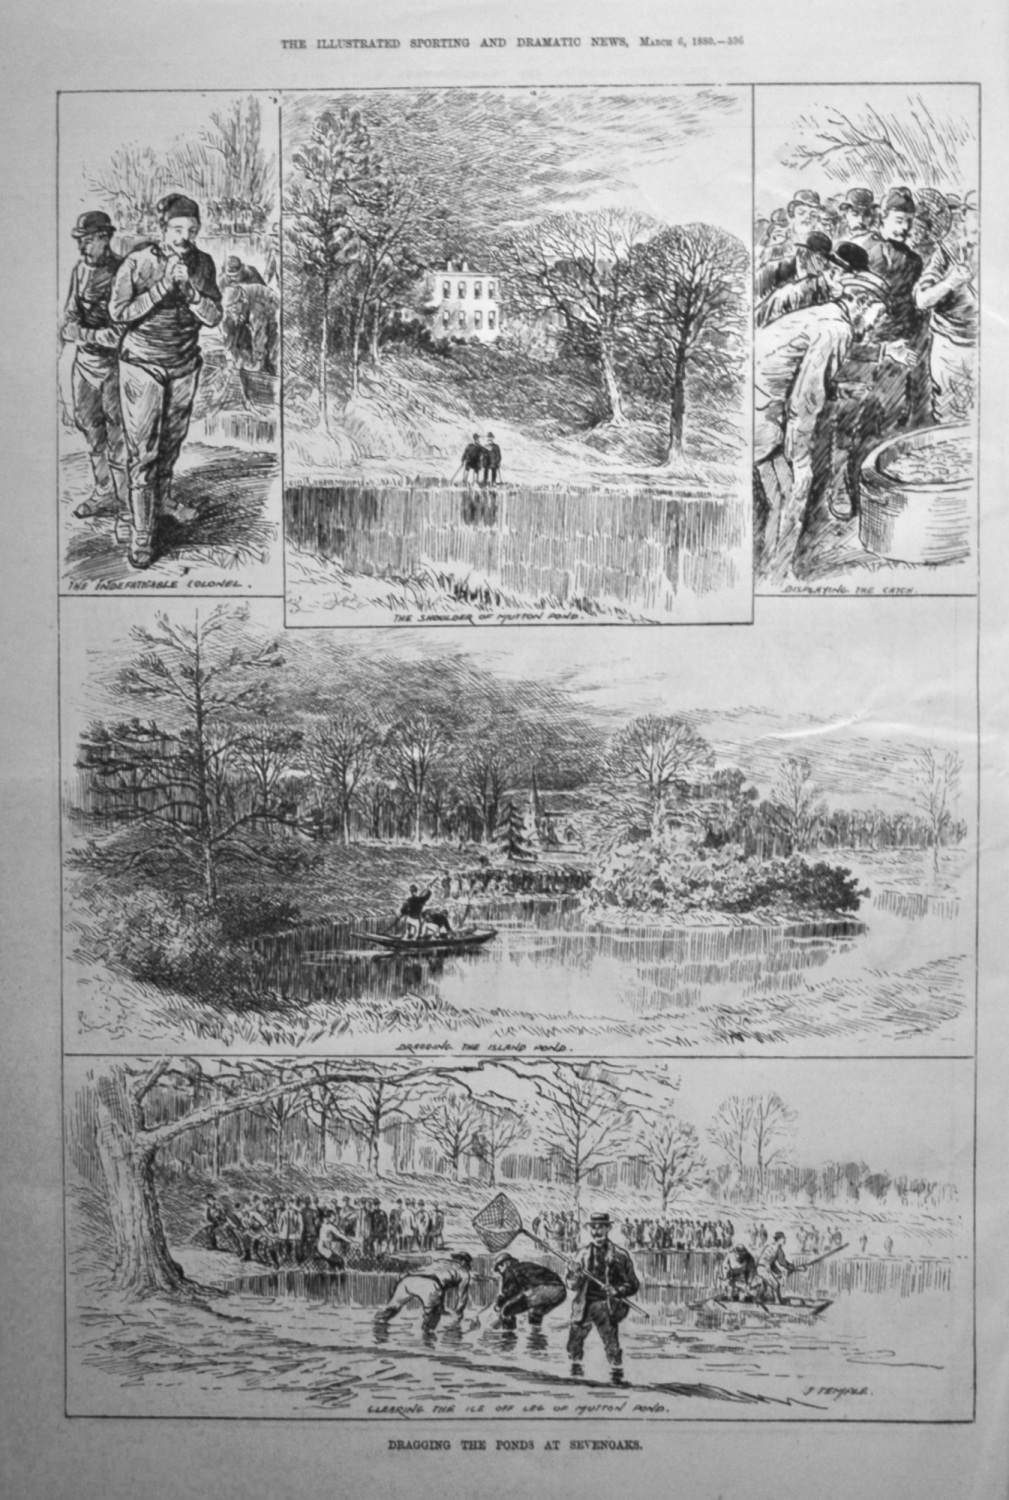 Dragging the Ponds at Sevenoaks. 1880.